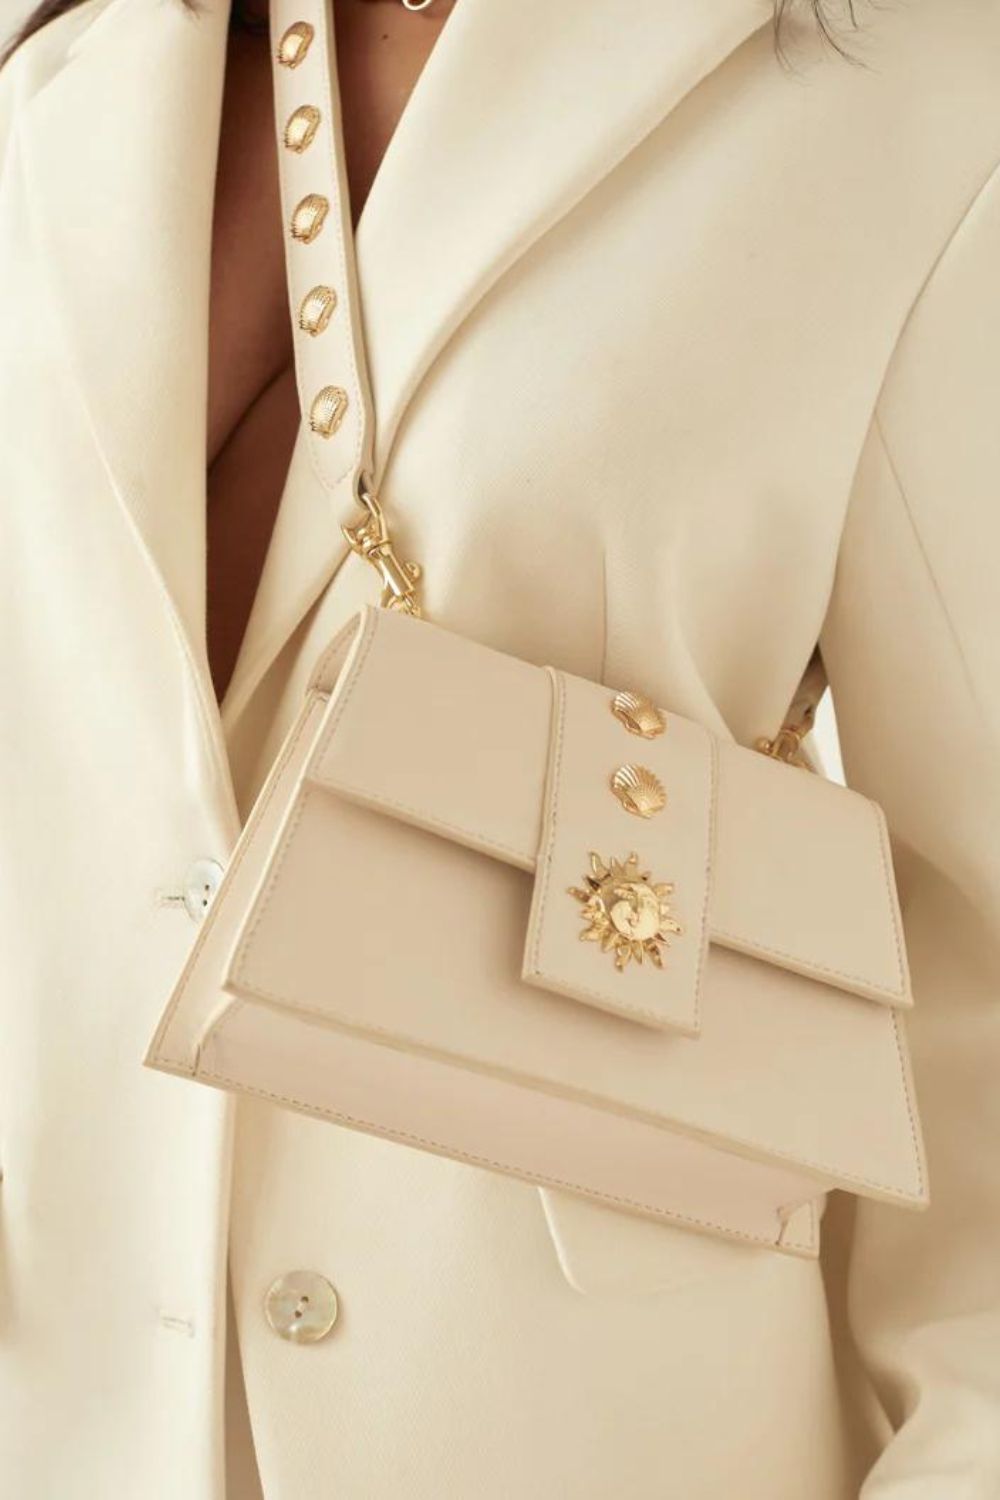 Poppy Lissiman Tamarama Bag in Blanc